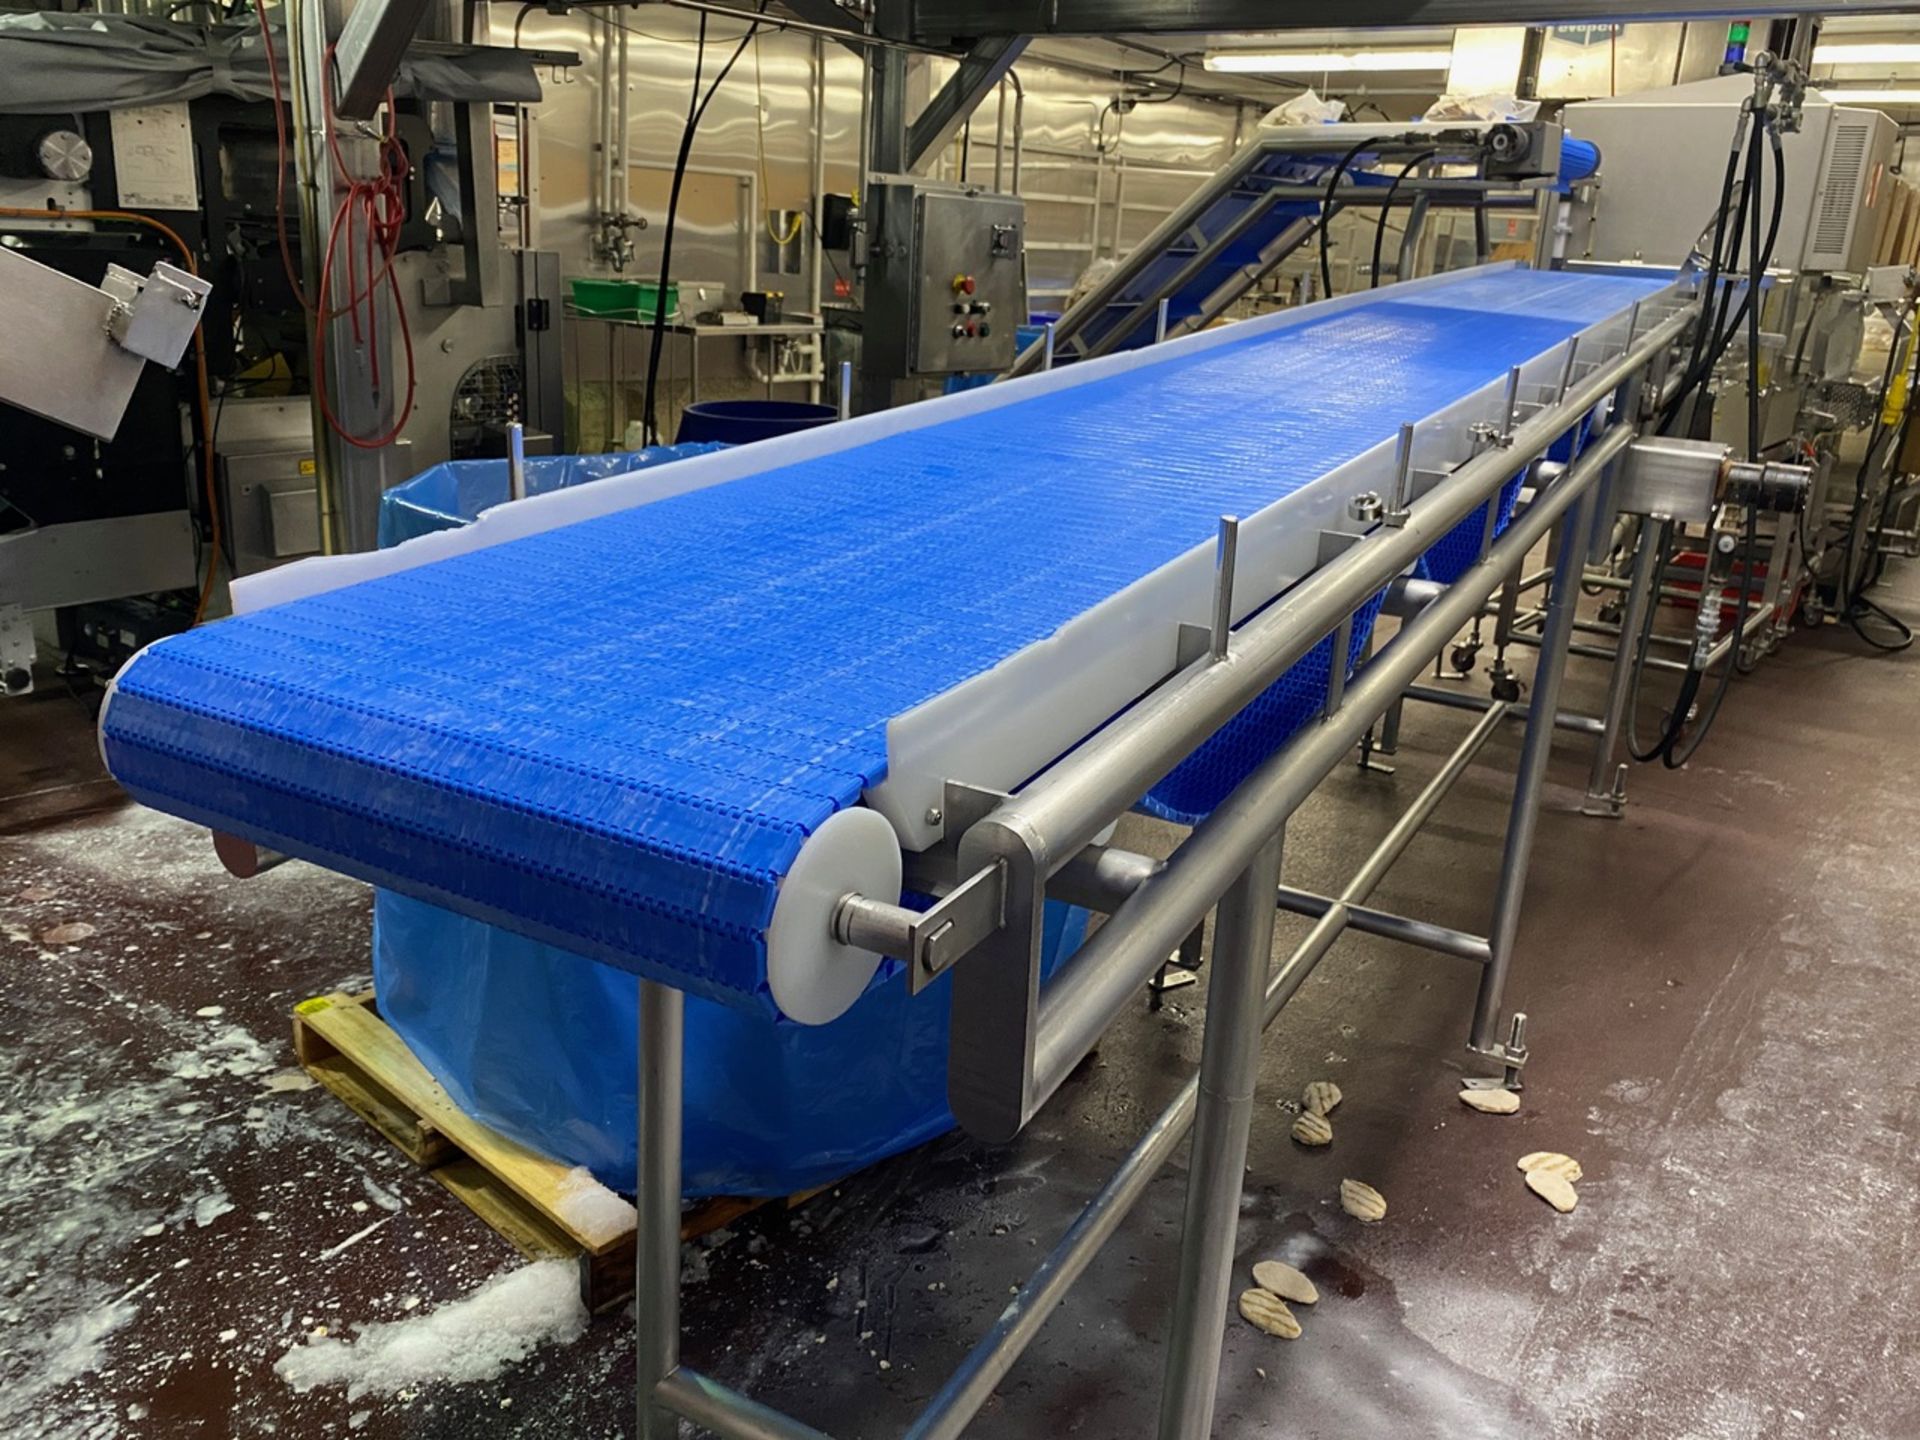 Stainless Steel Tubular Frame Conveyor with Leveling Feet | Rig Fee: $250